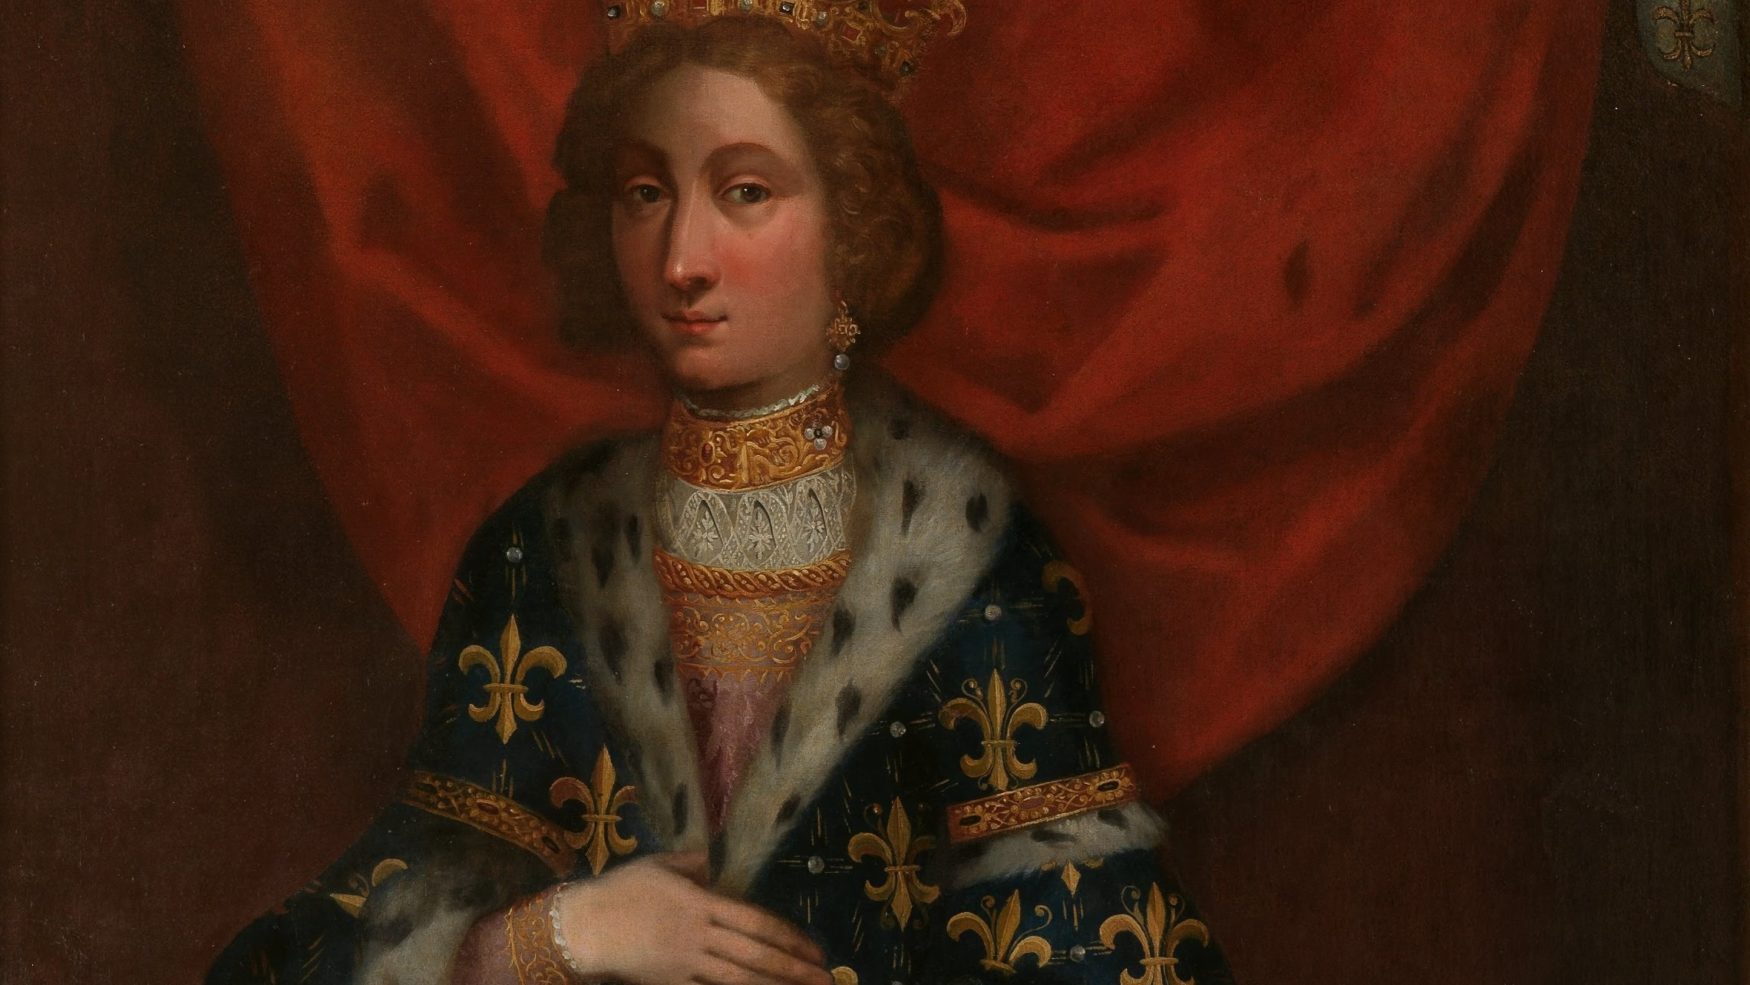 Bonne de Berry, Countess of Savoy